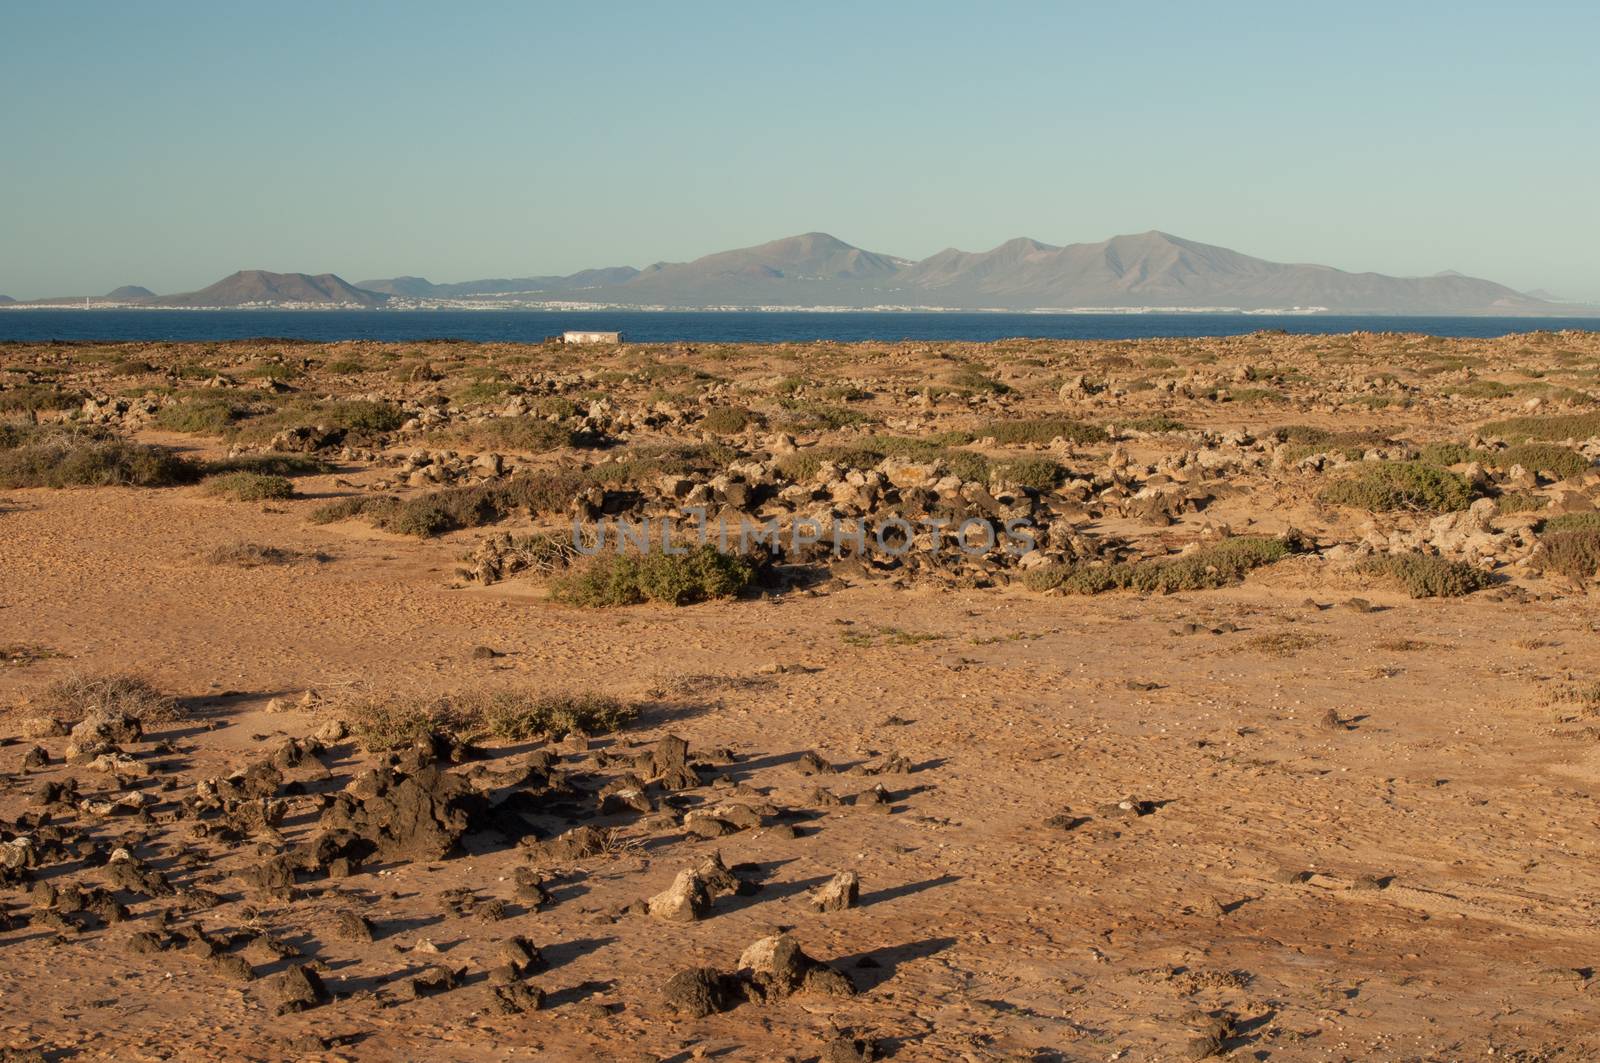 Majanicho and island of Lanzarote (south) in the background. La Oliva. Fuerteventura. Canary Islands. Spain.